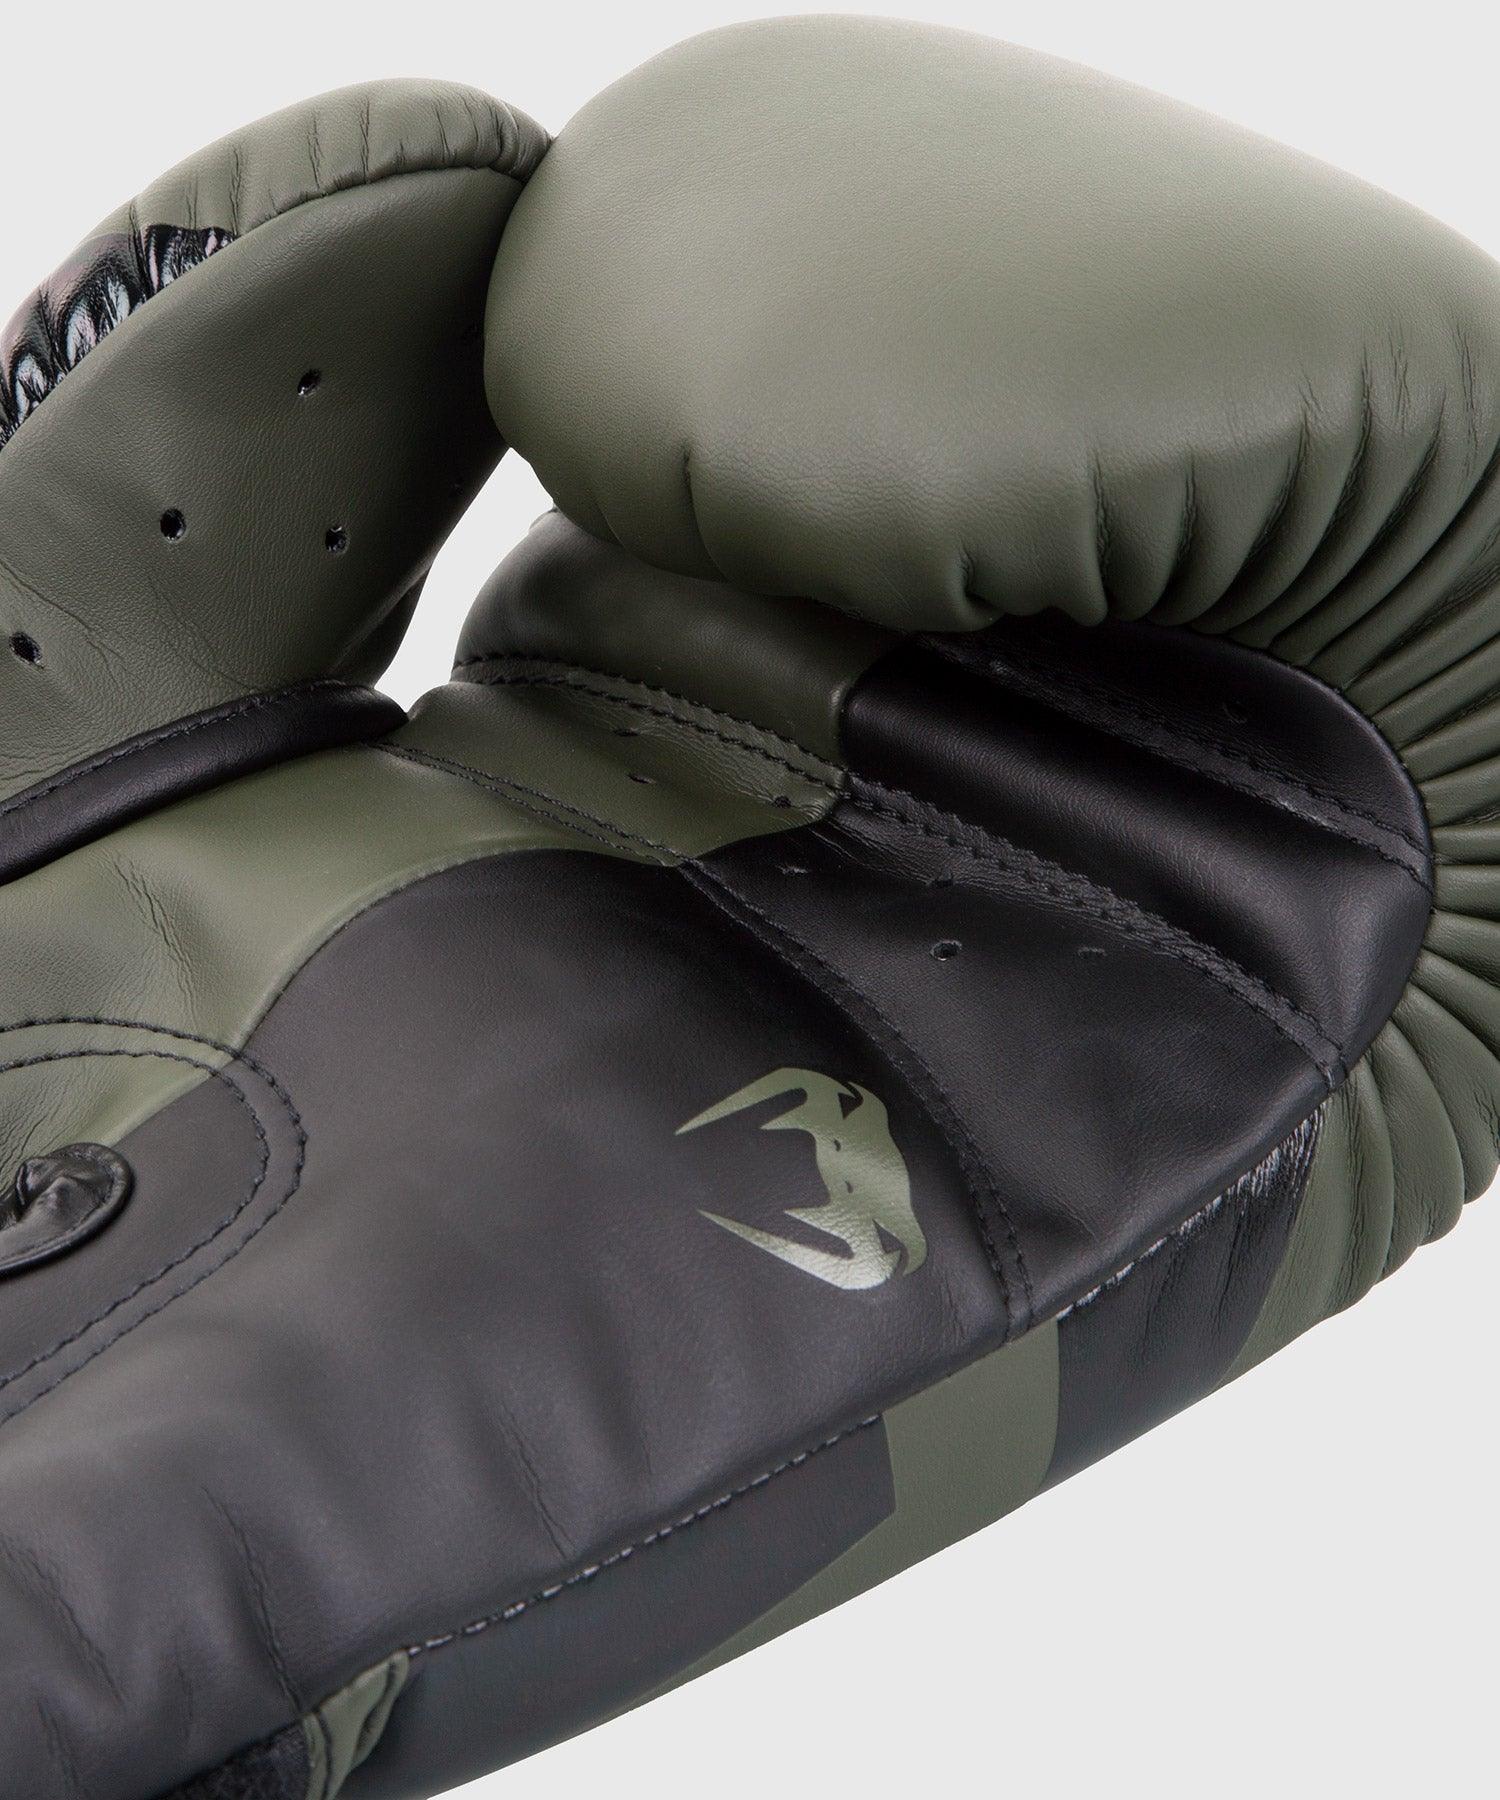 Venum Elite Boxing Gloves - Khaki/Black Picture 4